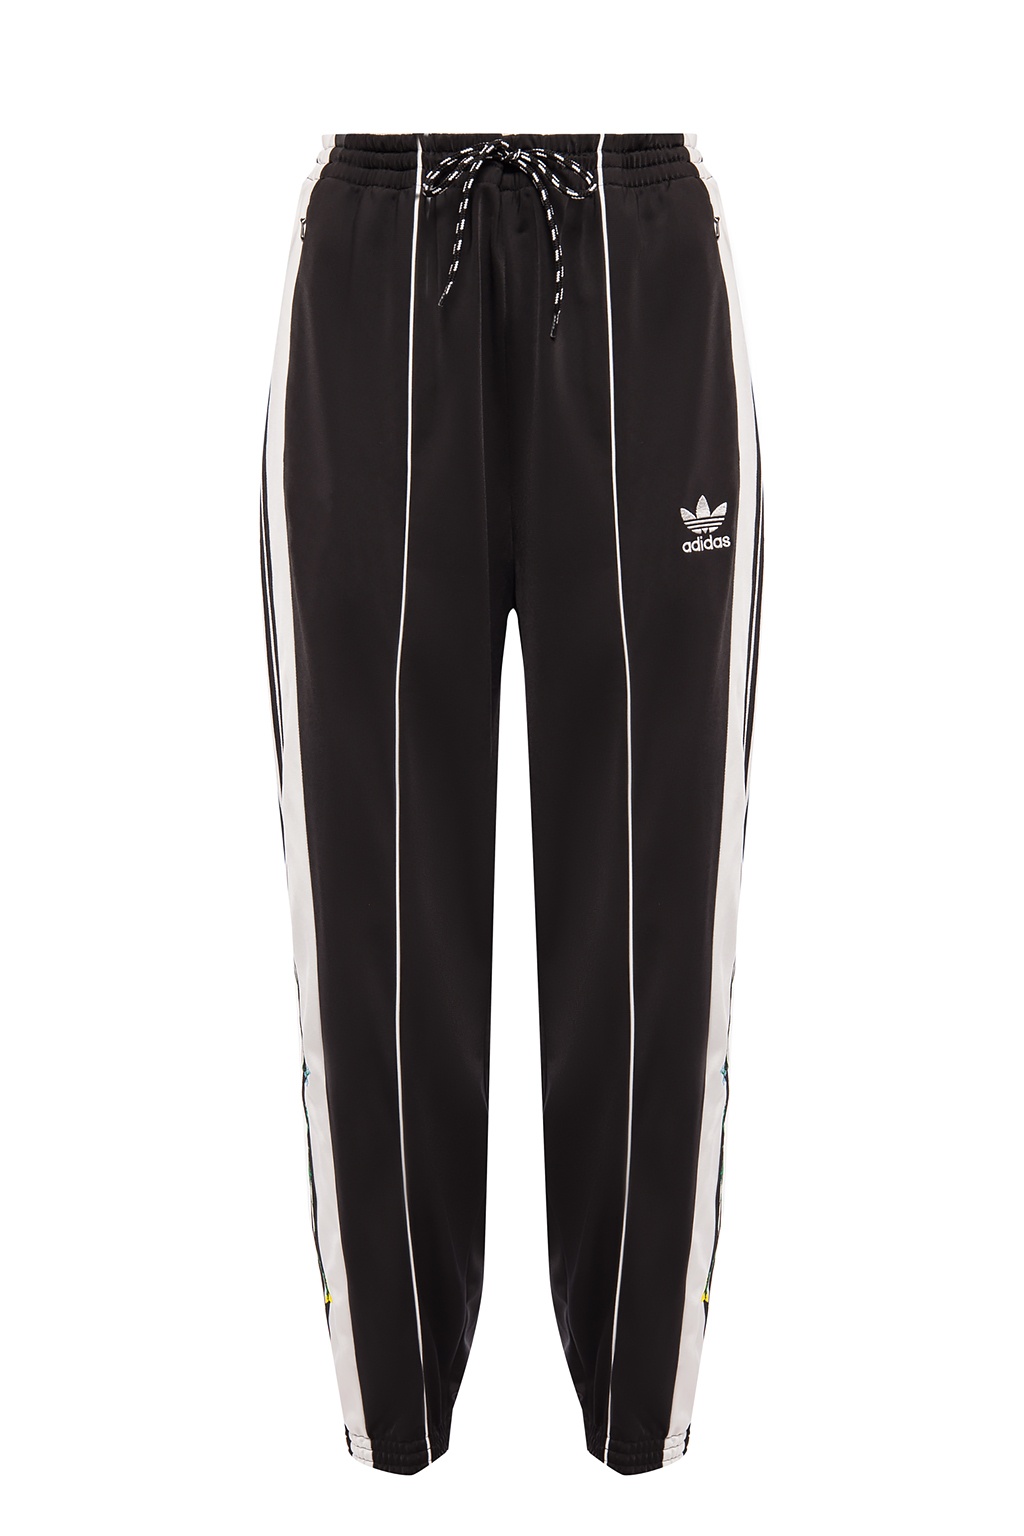 Adidas  Adidas Floral Track Pants on Designer Wardrobe